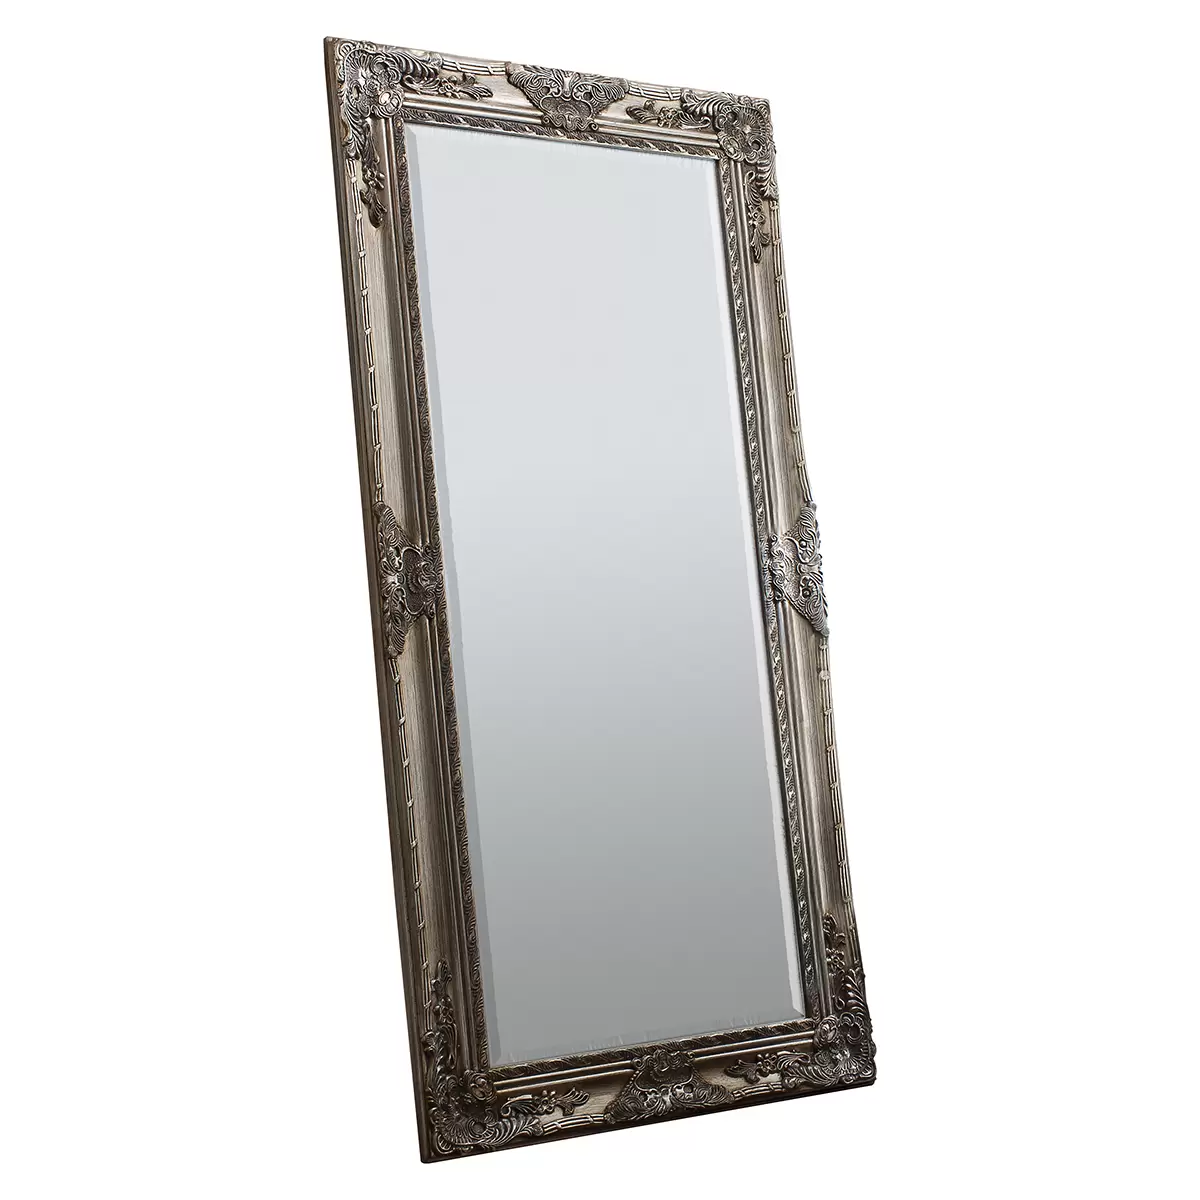 Hudson Living Hampshire Leaner Mirror 1700x840mm